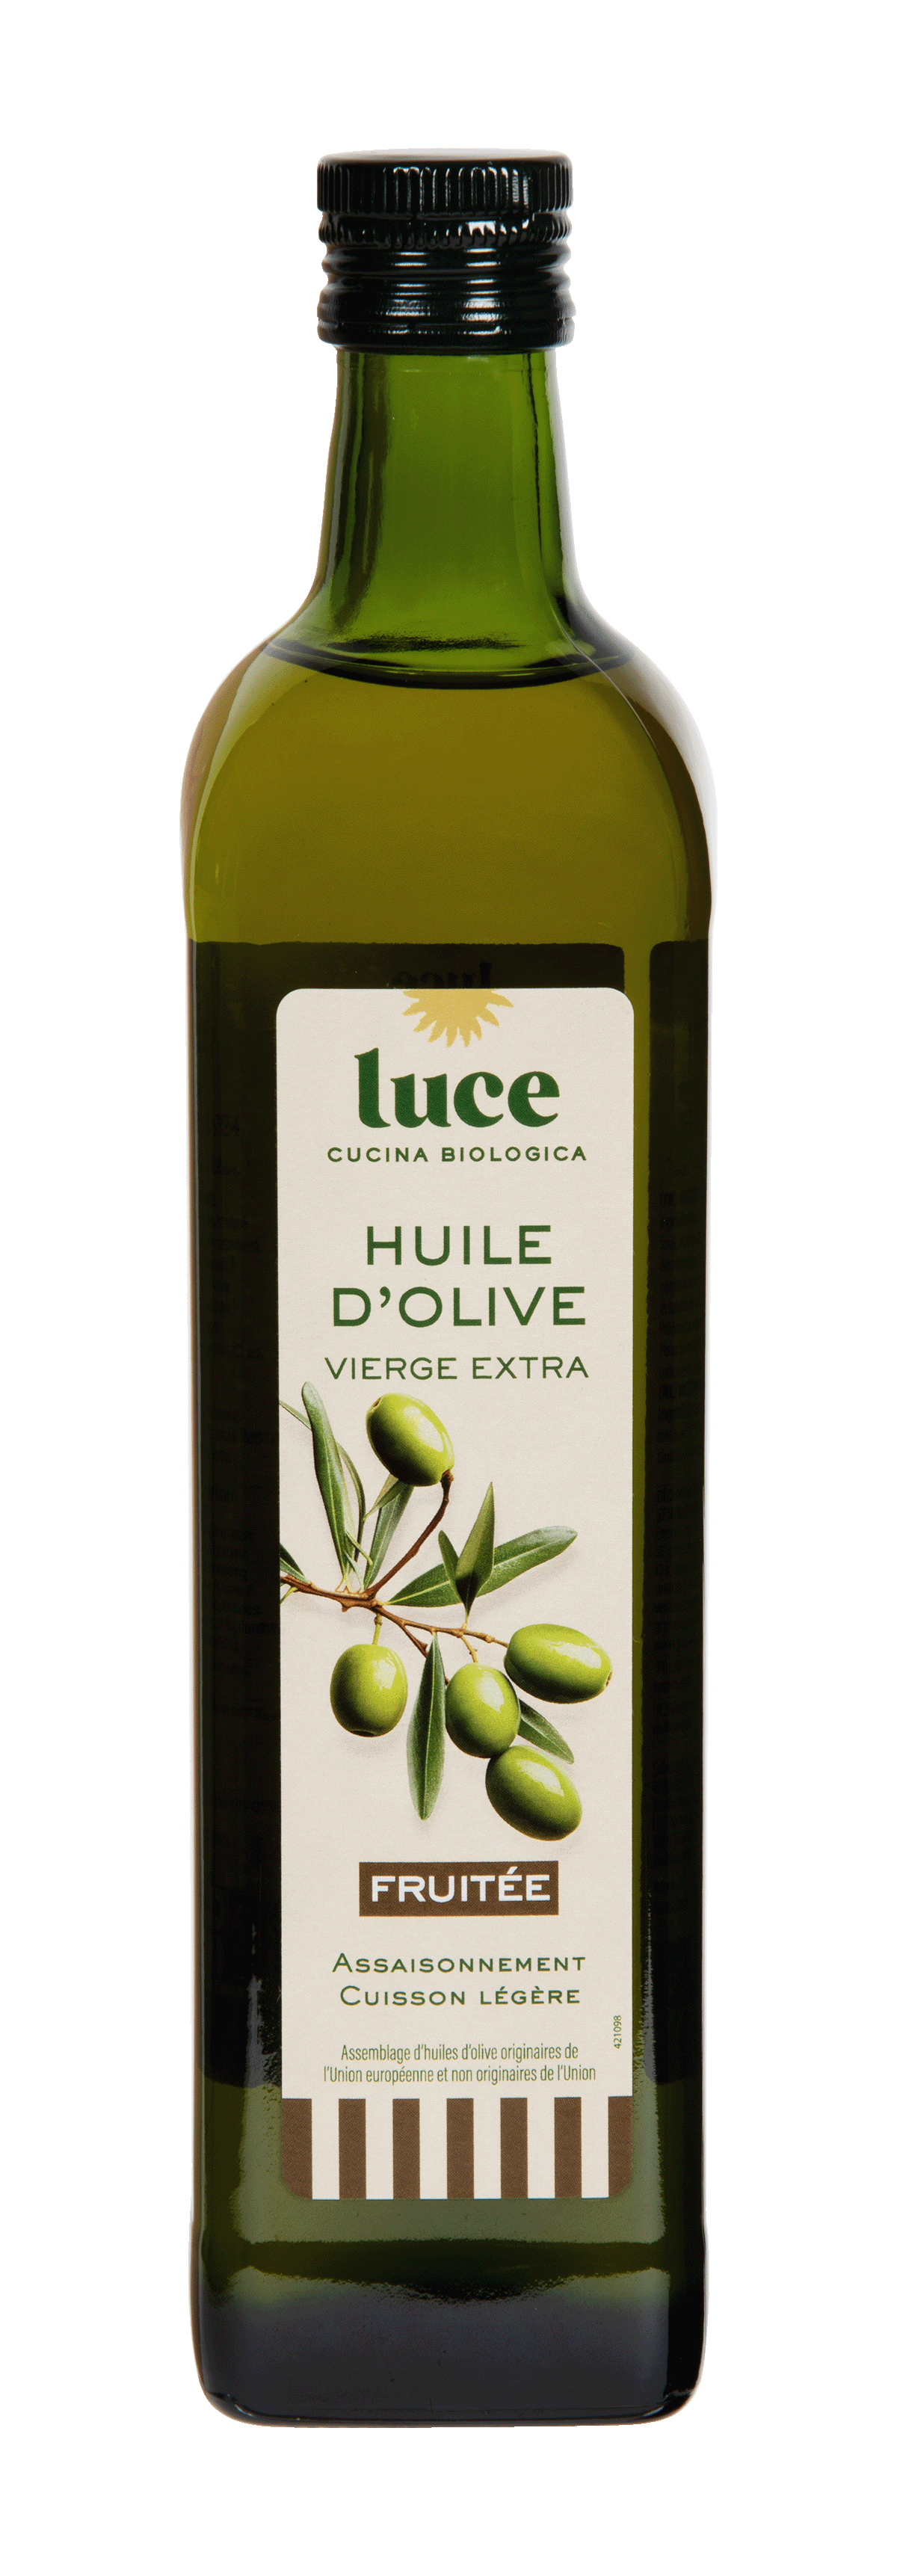 Luce Huile olive vierge extra fruitee bio 75cl - 1902